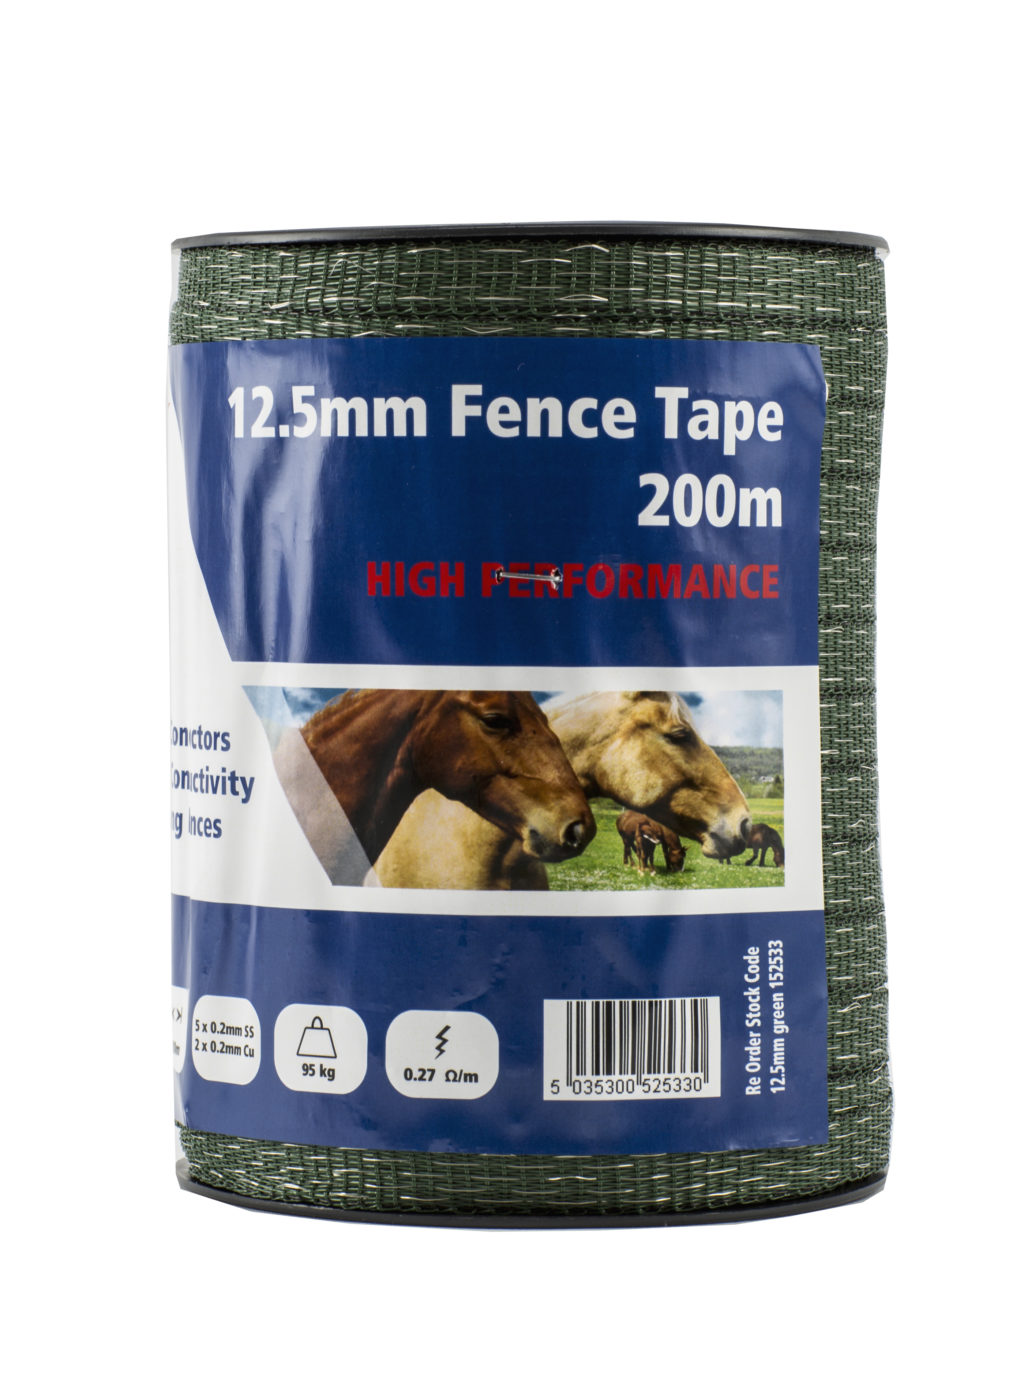 Fenceman Tape Green 12.5mm 200m High Performance